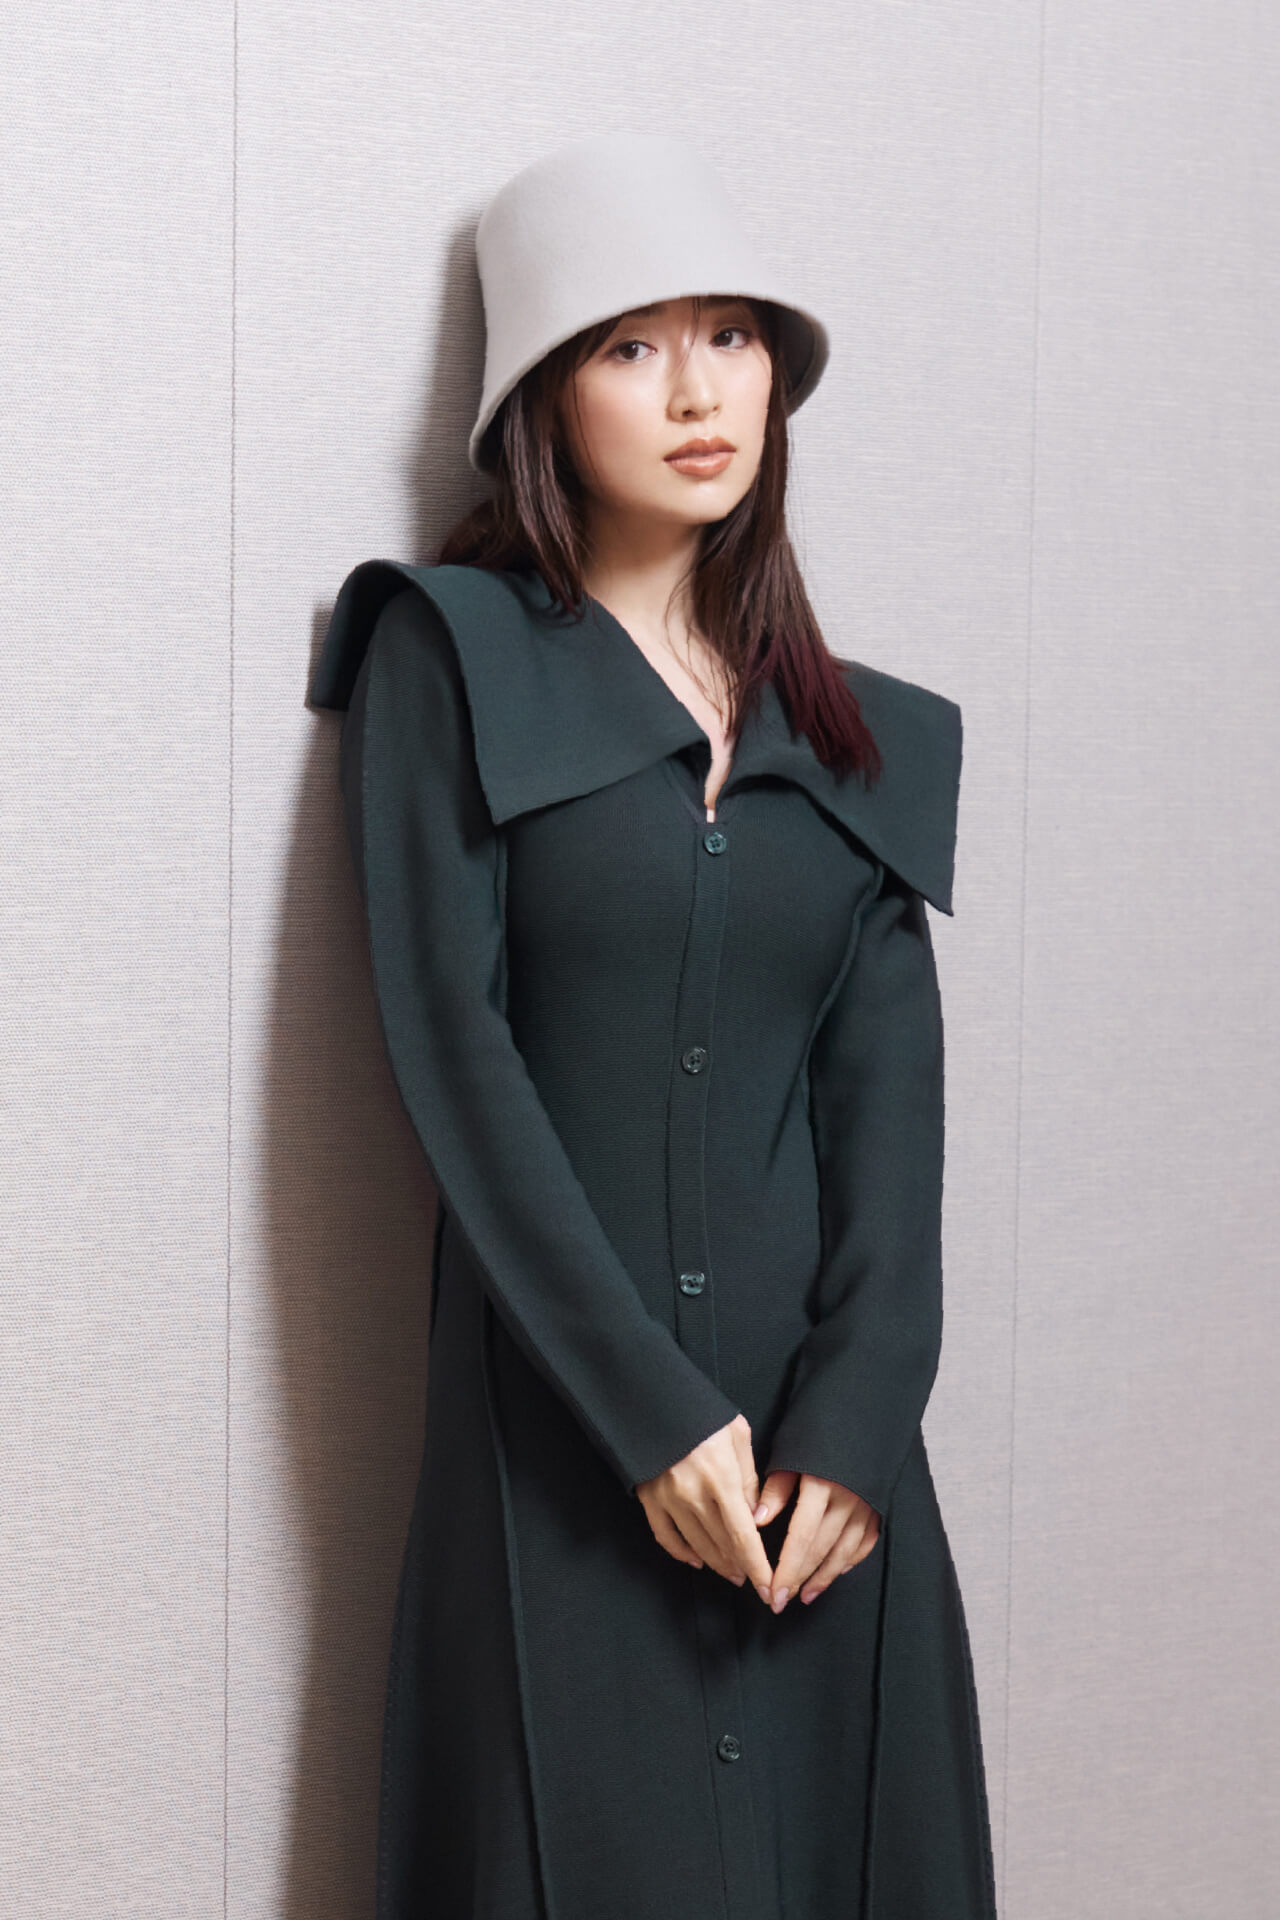 model Rika Izumi